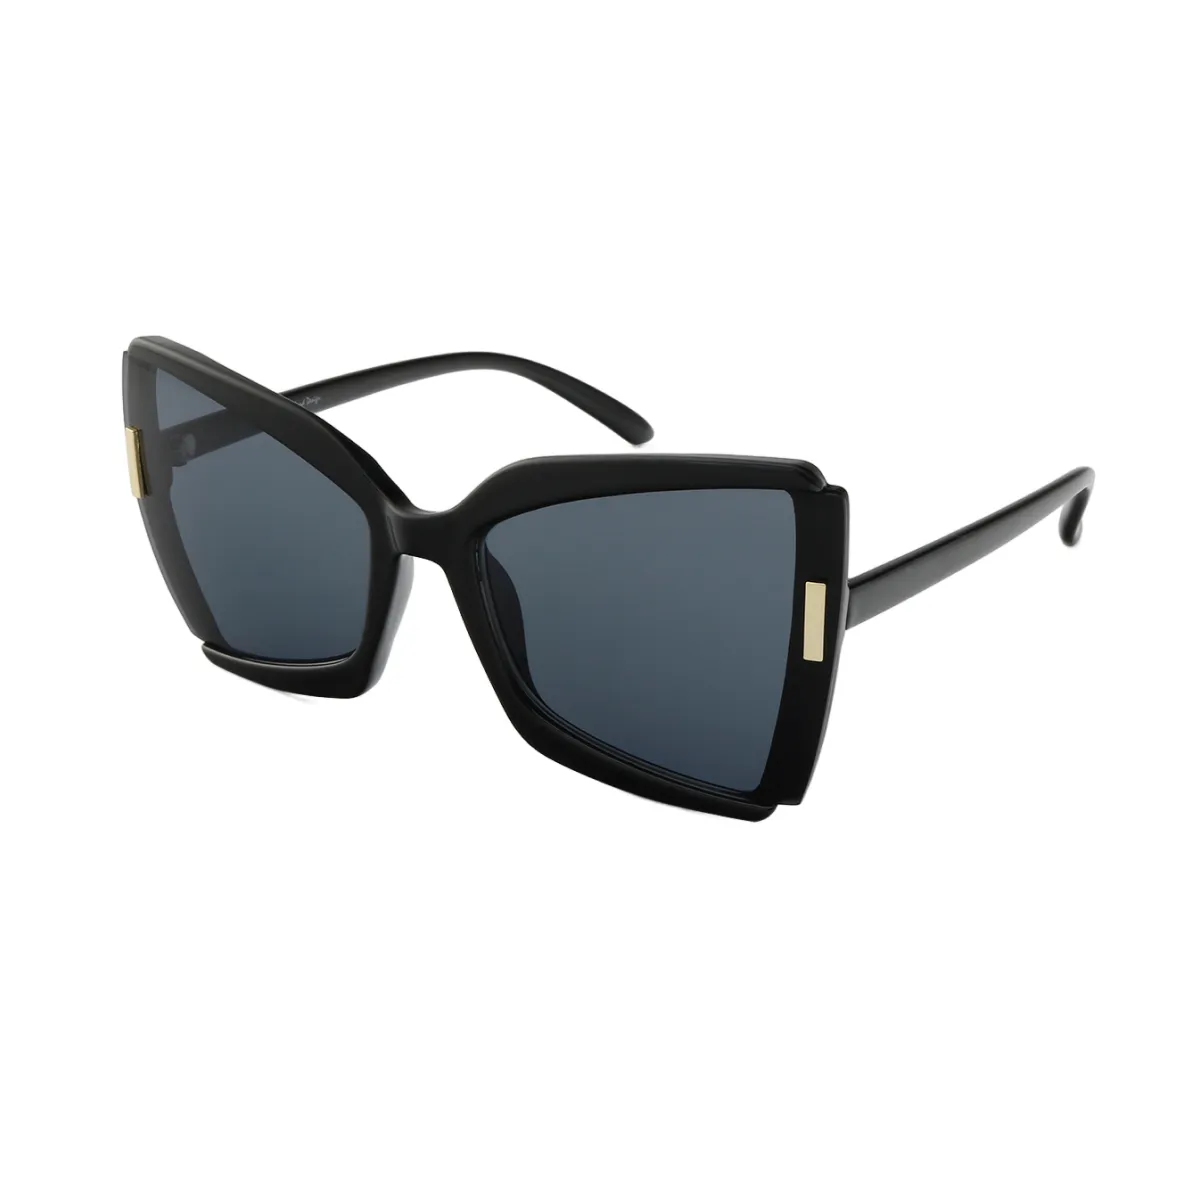 Pat - Square Black Sunglasses for Women